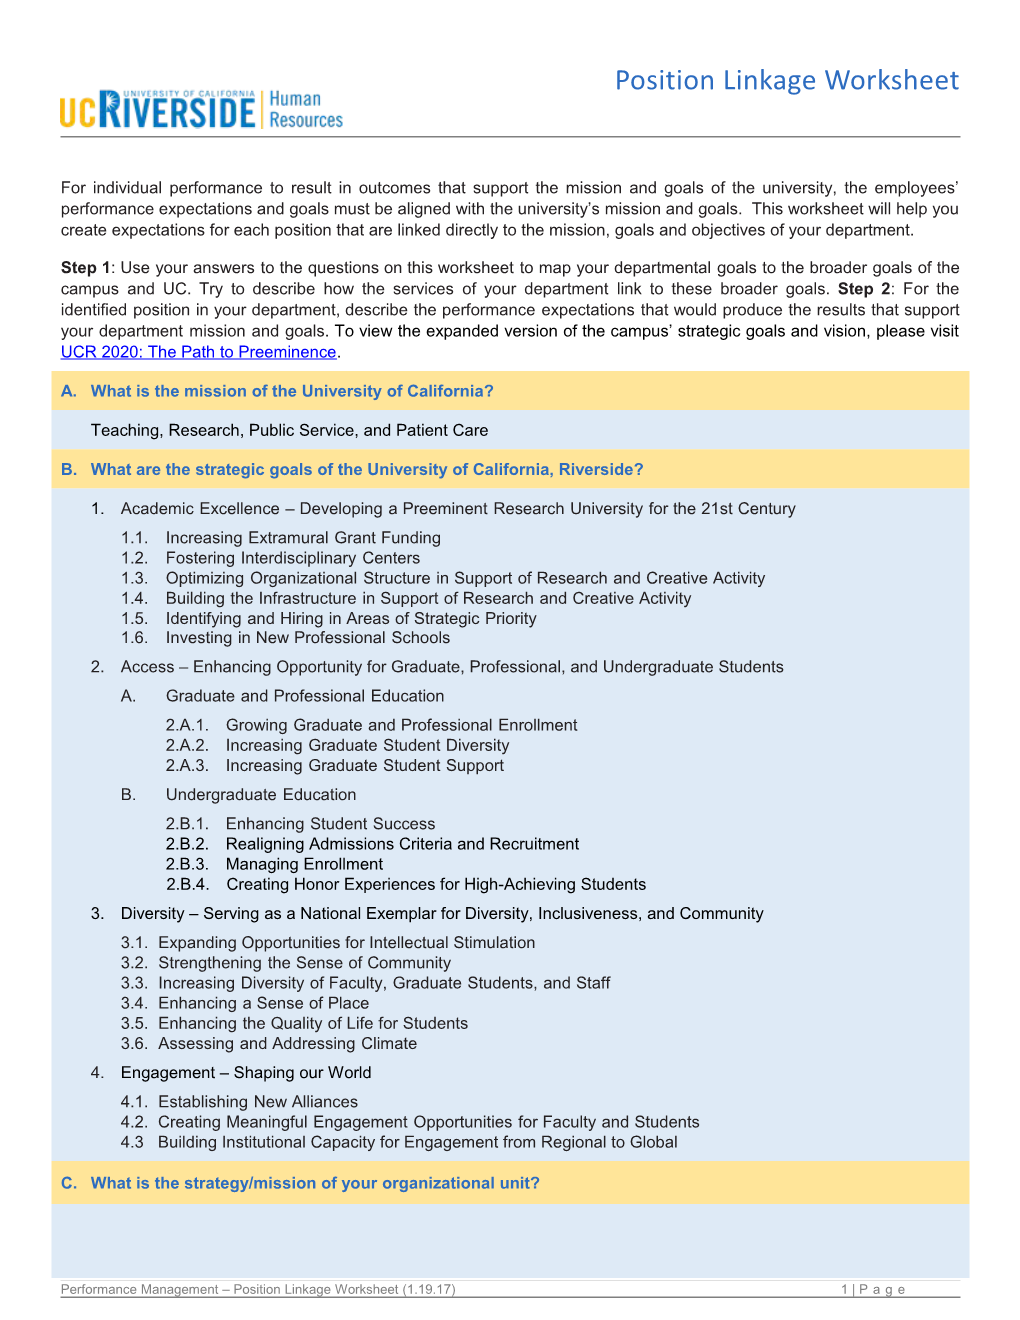 Performance Management Position Linkage Worksheet (1.19.17) 1 Page